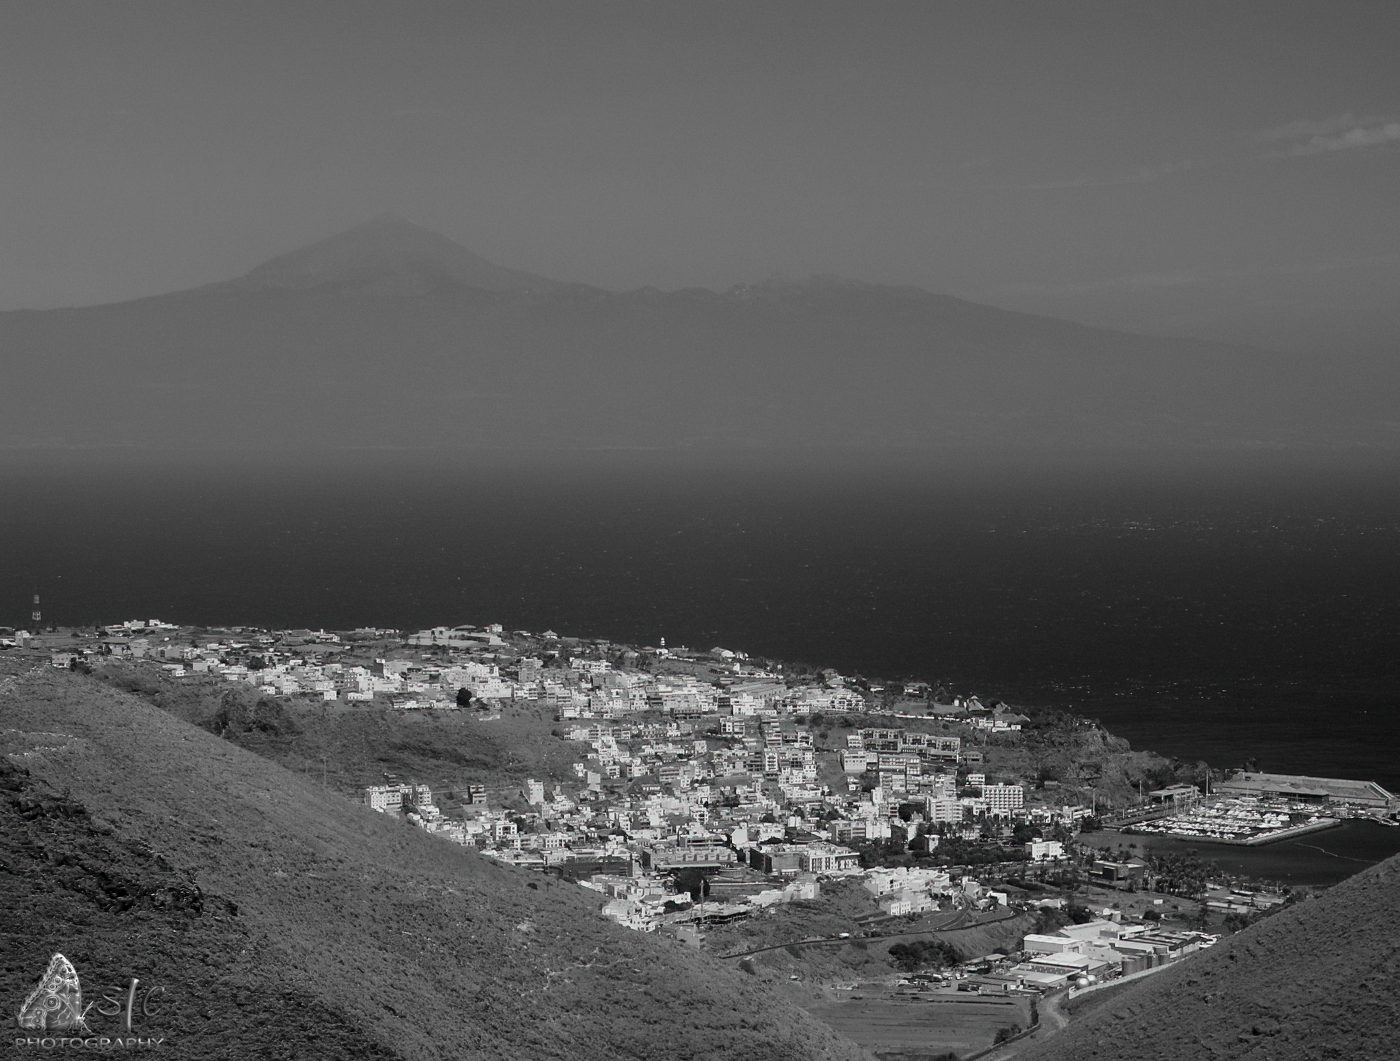 San Sebastian de La Gomera – La Gomera Island – Canary Islands (Spain) and in the background Tenerife Island, with the mighty peak of Teide volcano